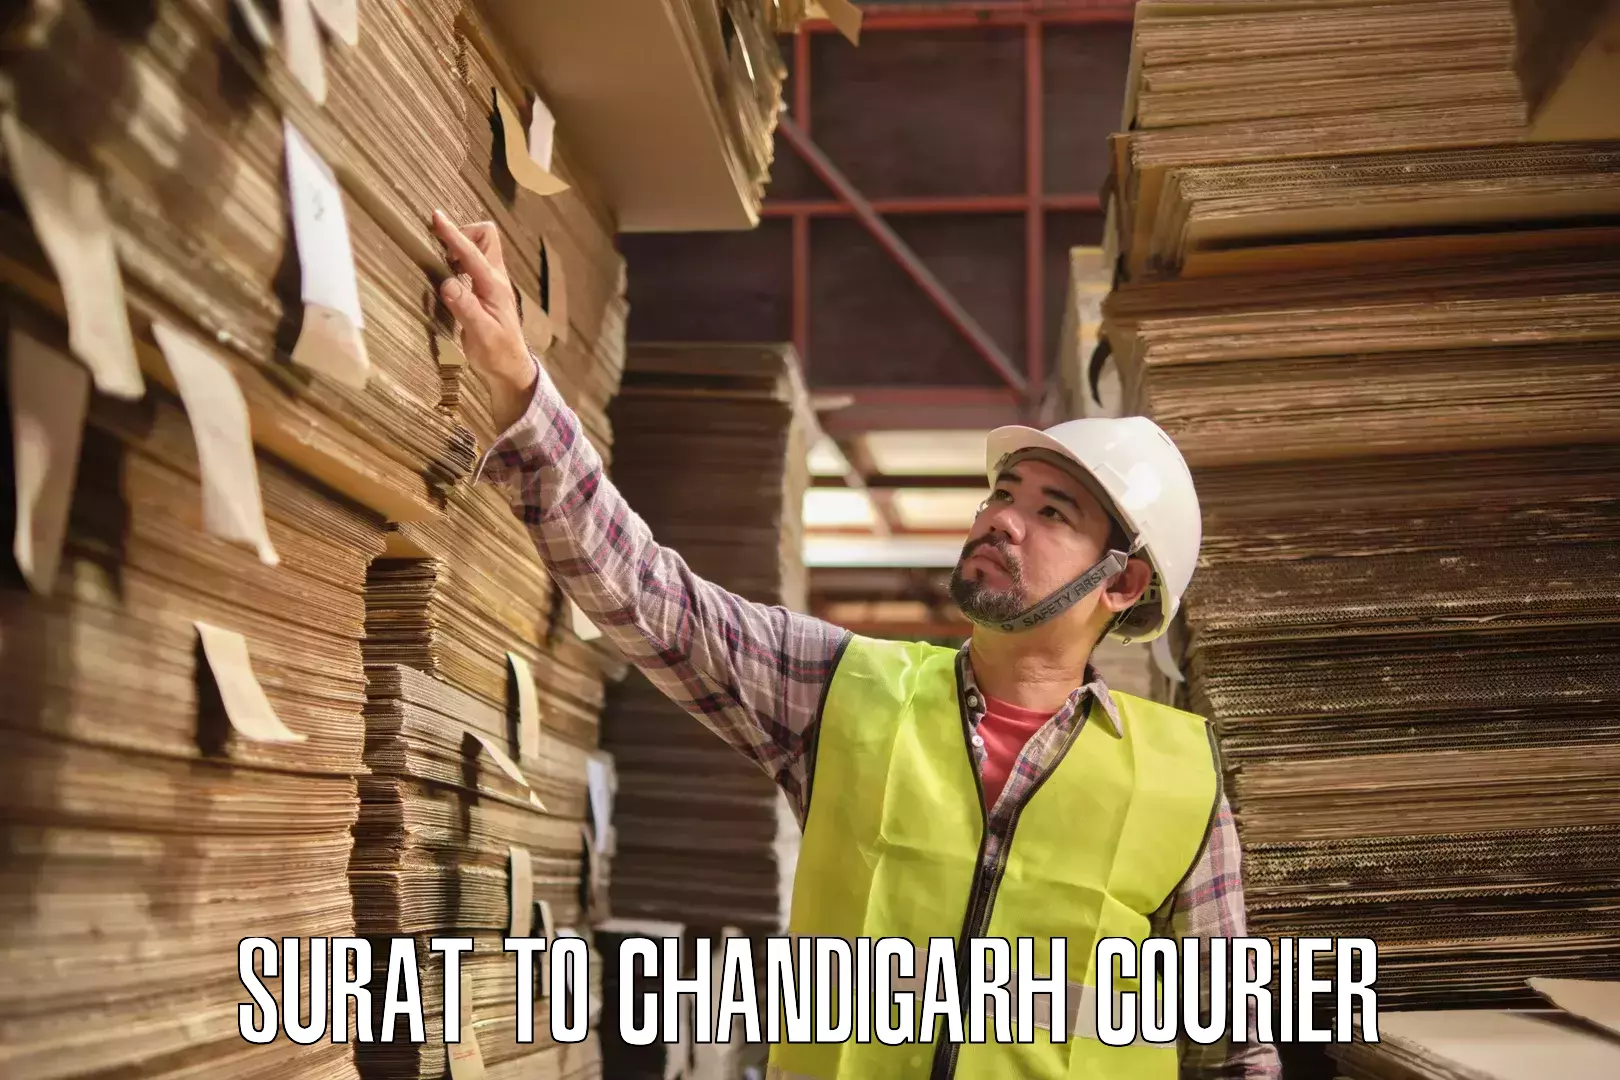 Courier service comparison Surat to Chandigarh